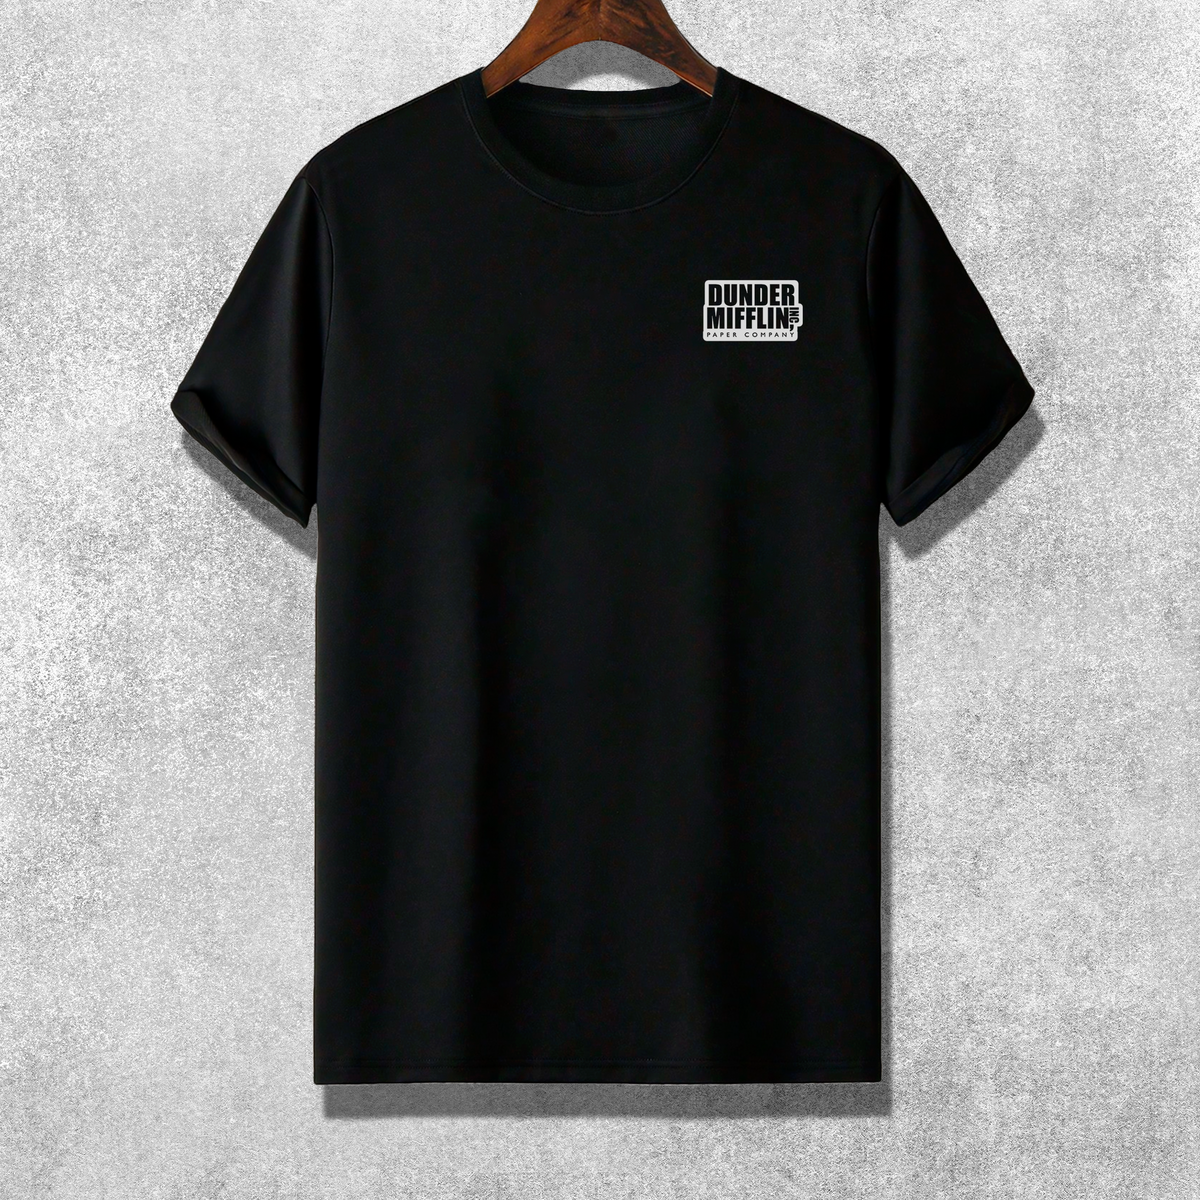 Nome do produto: Camiseta Dunder Mifflin - The Office